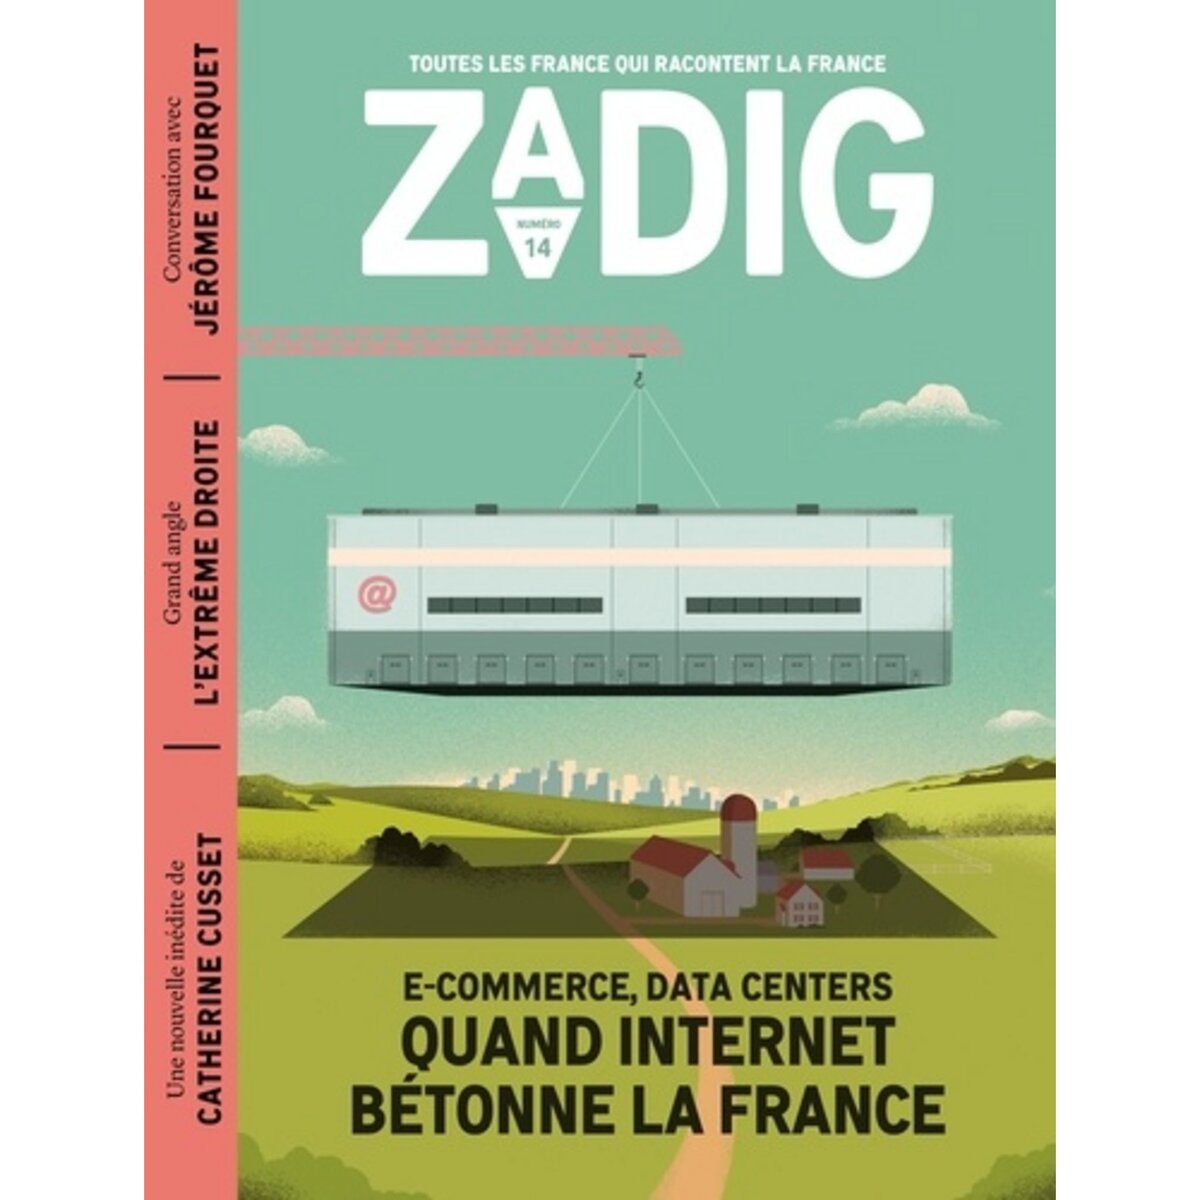  ZADIG N° 14 : E-COMMERCE, DATA CENTERS... QUAND INTERNET BETONNE LA FRANCE, Vey François